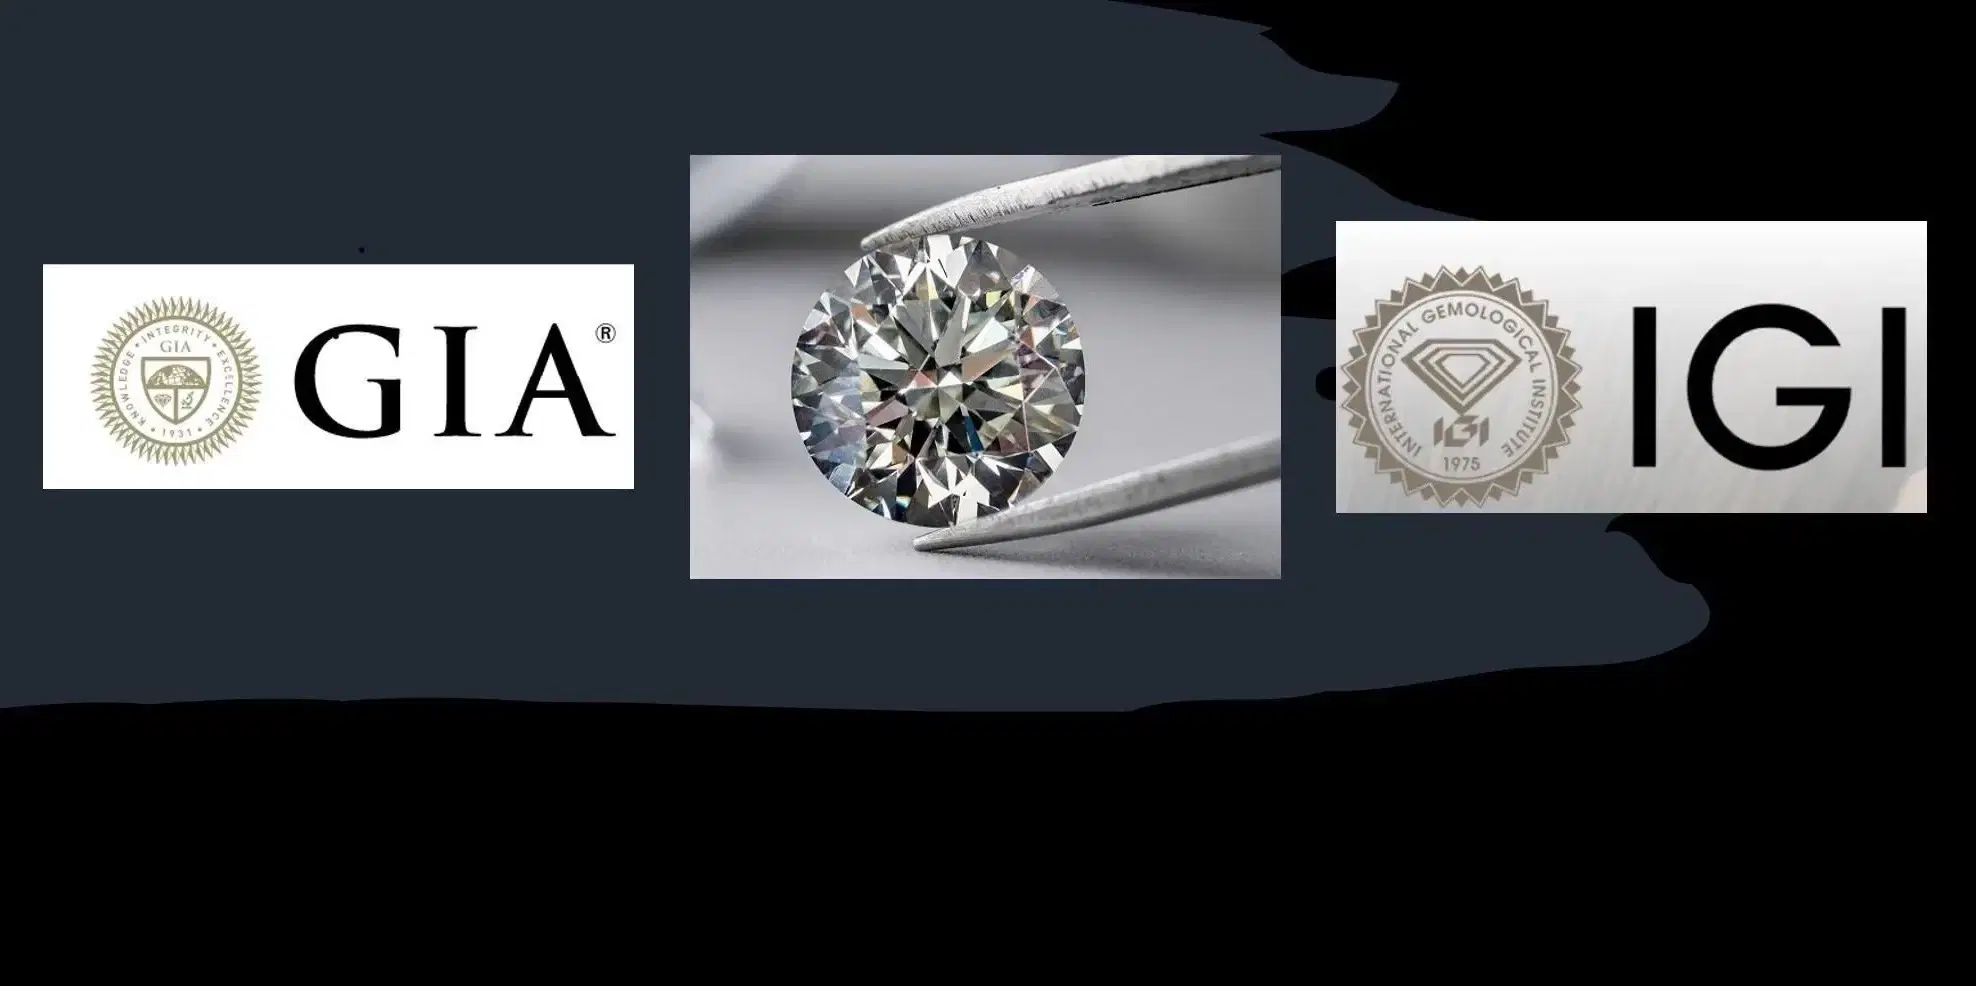 IGI vs GIA: Which Diamond Certification is Better?